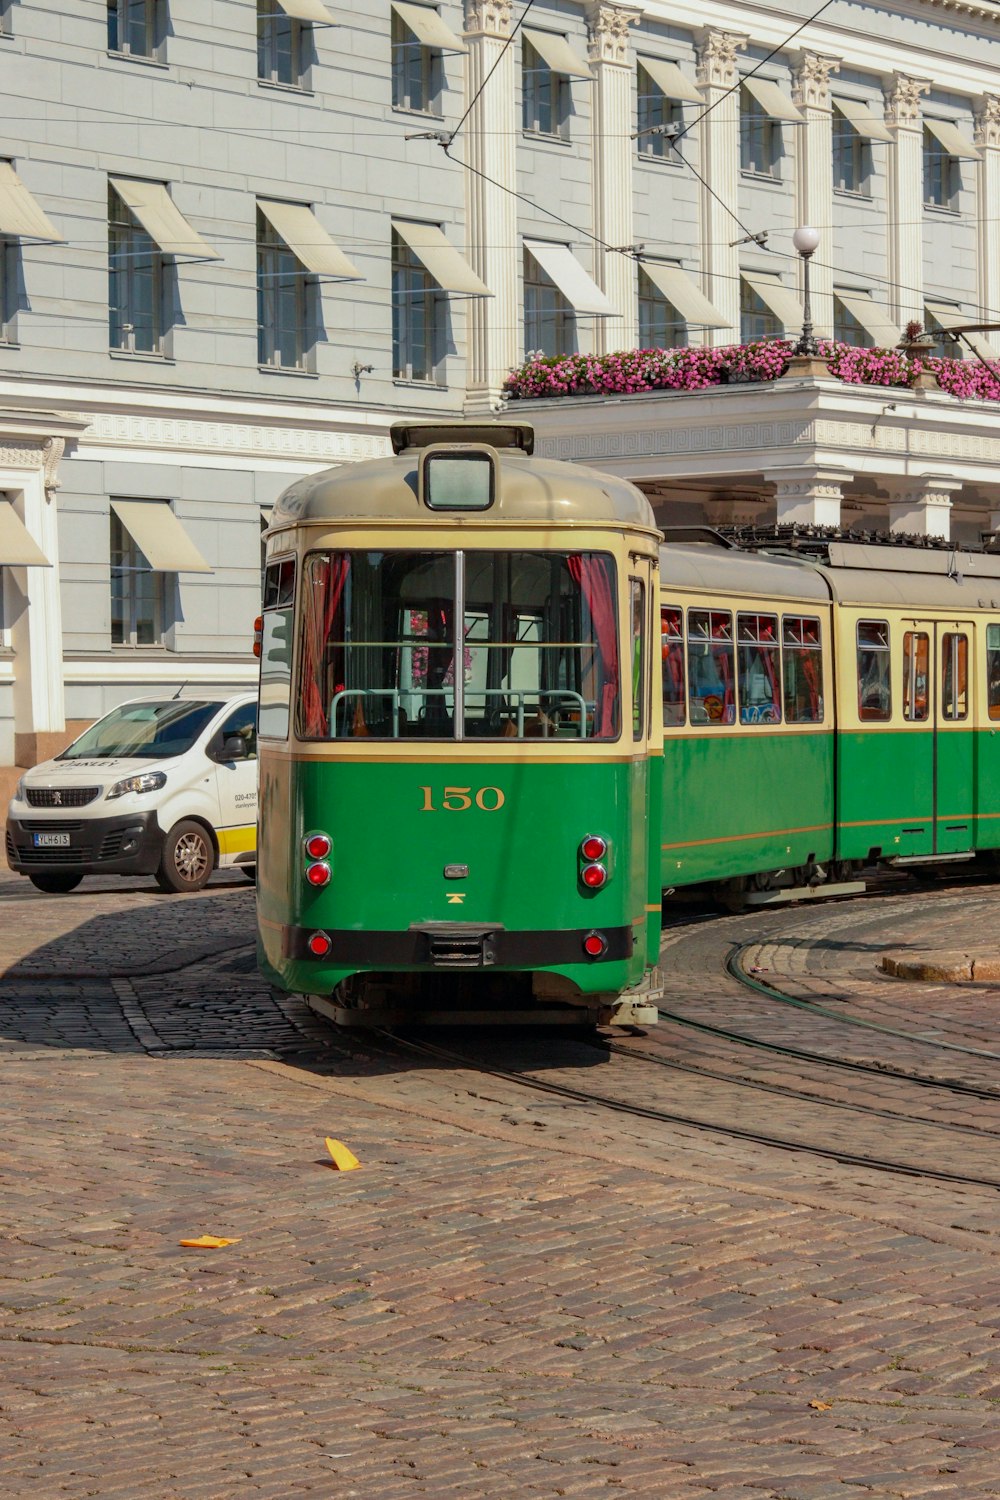 green train in city